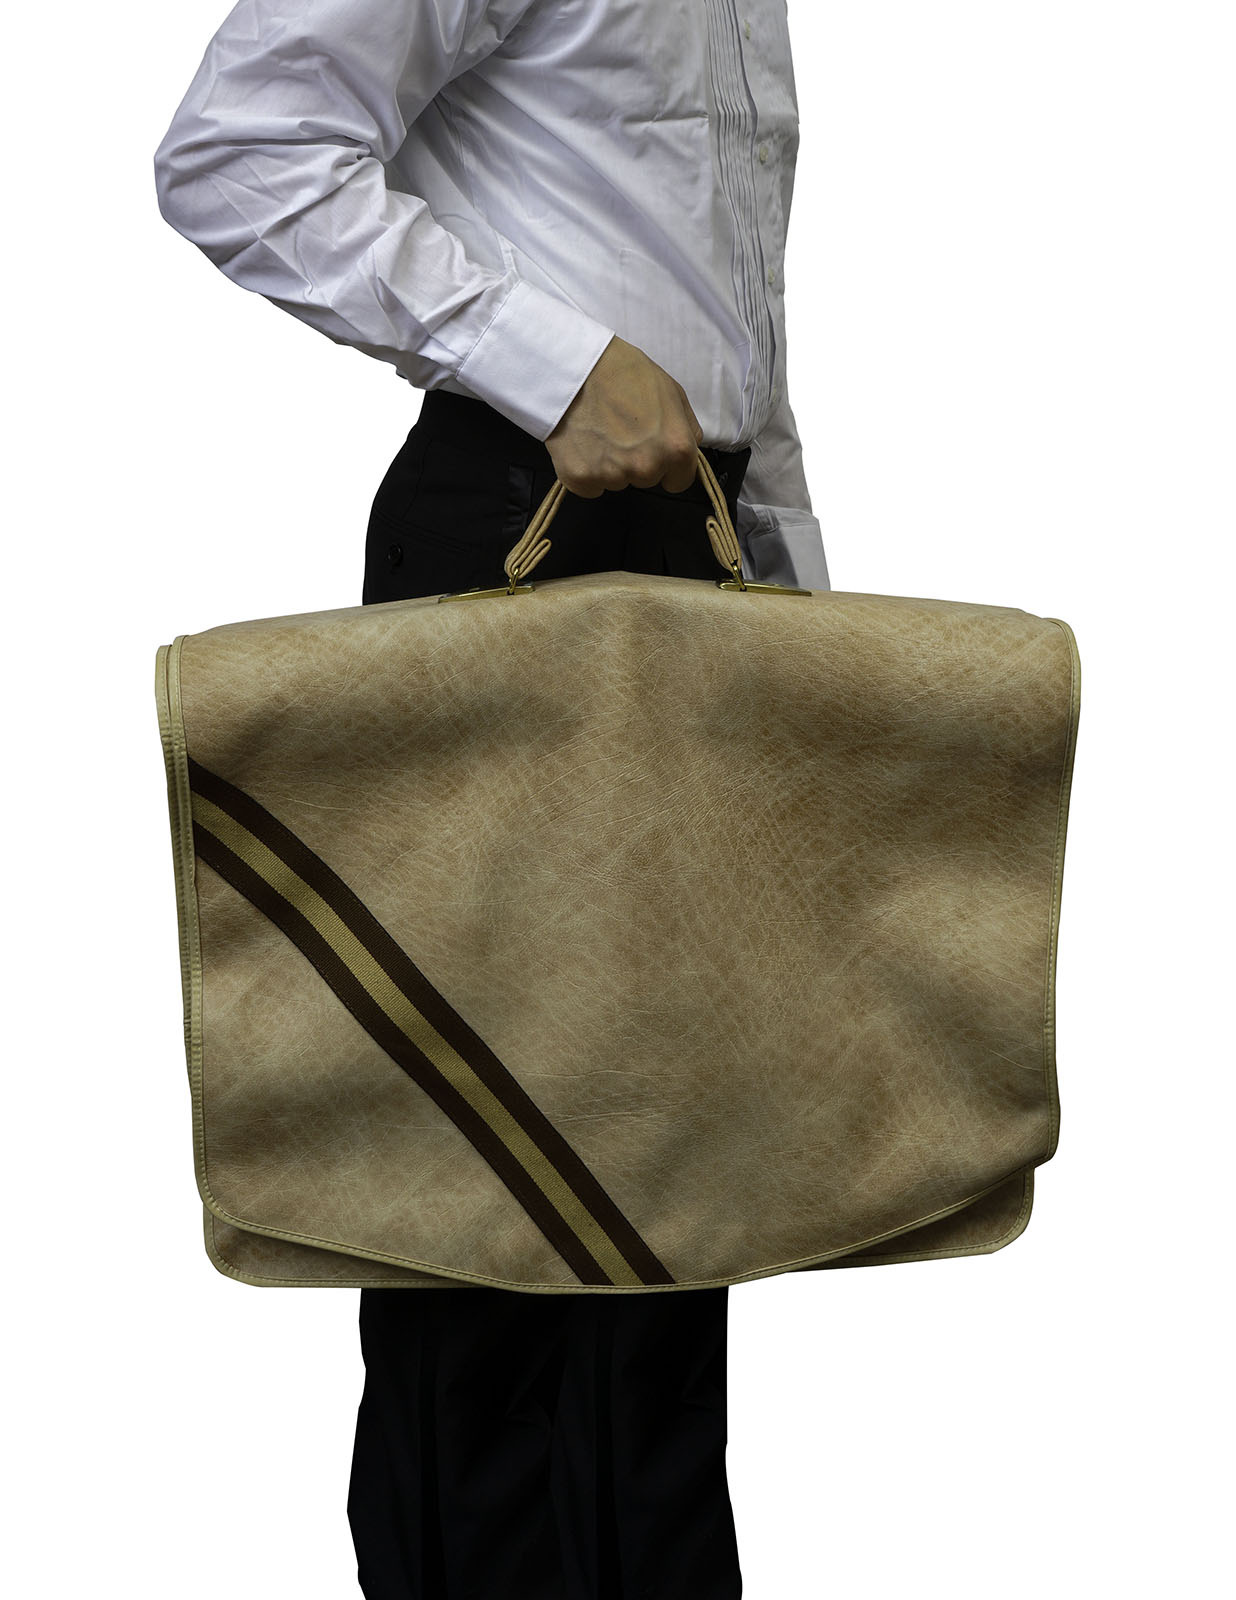 NEW Mens Suit Garment Travel Suit BAG TAN | eBay